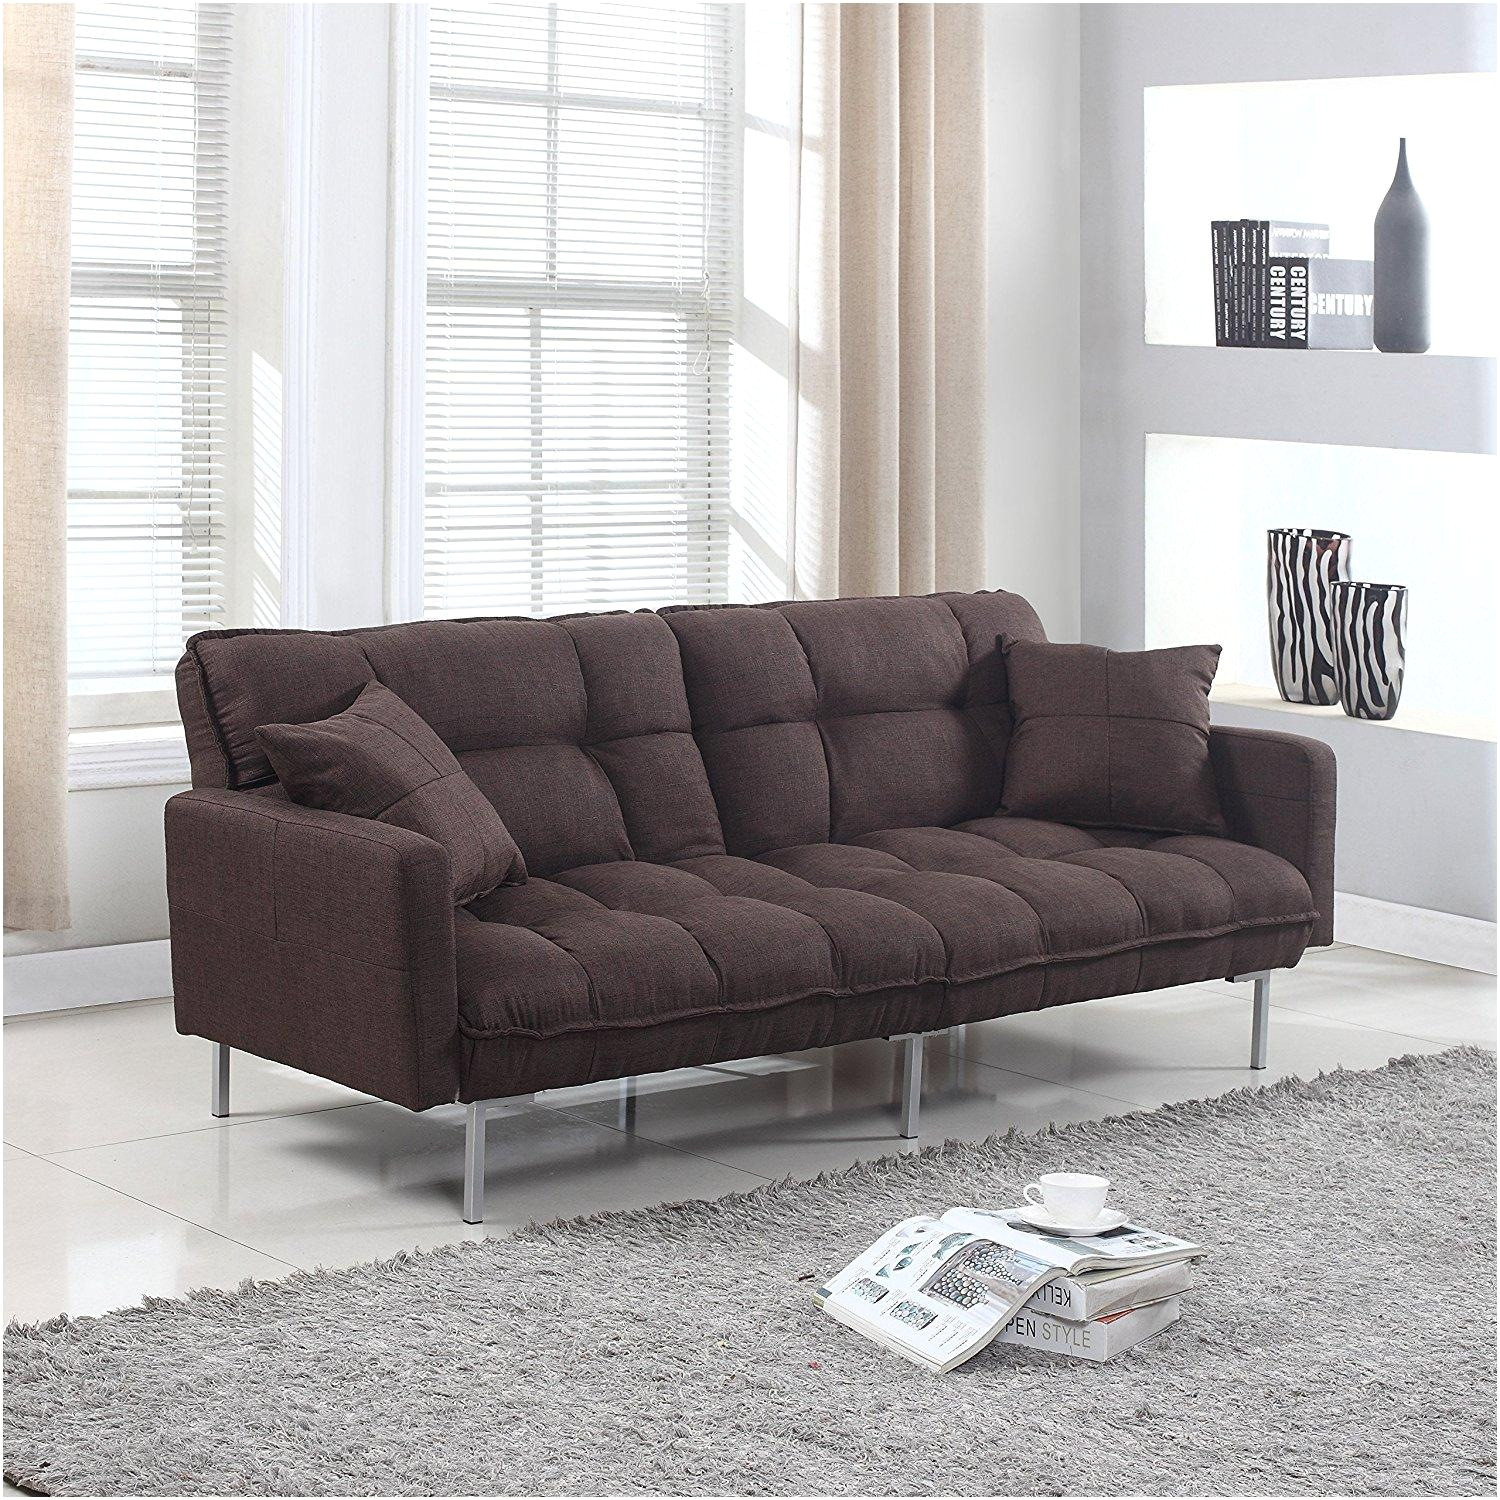 futon bettsofa luxus furniture queen size futons best futon new leather futon sofa foto